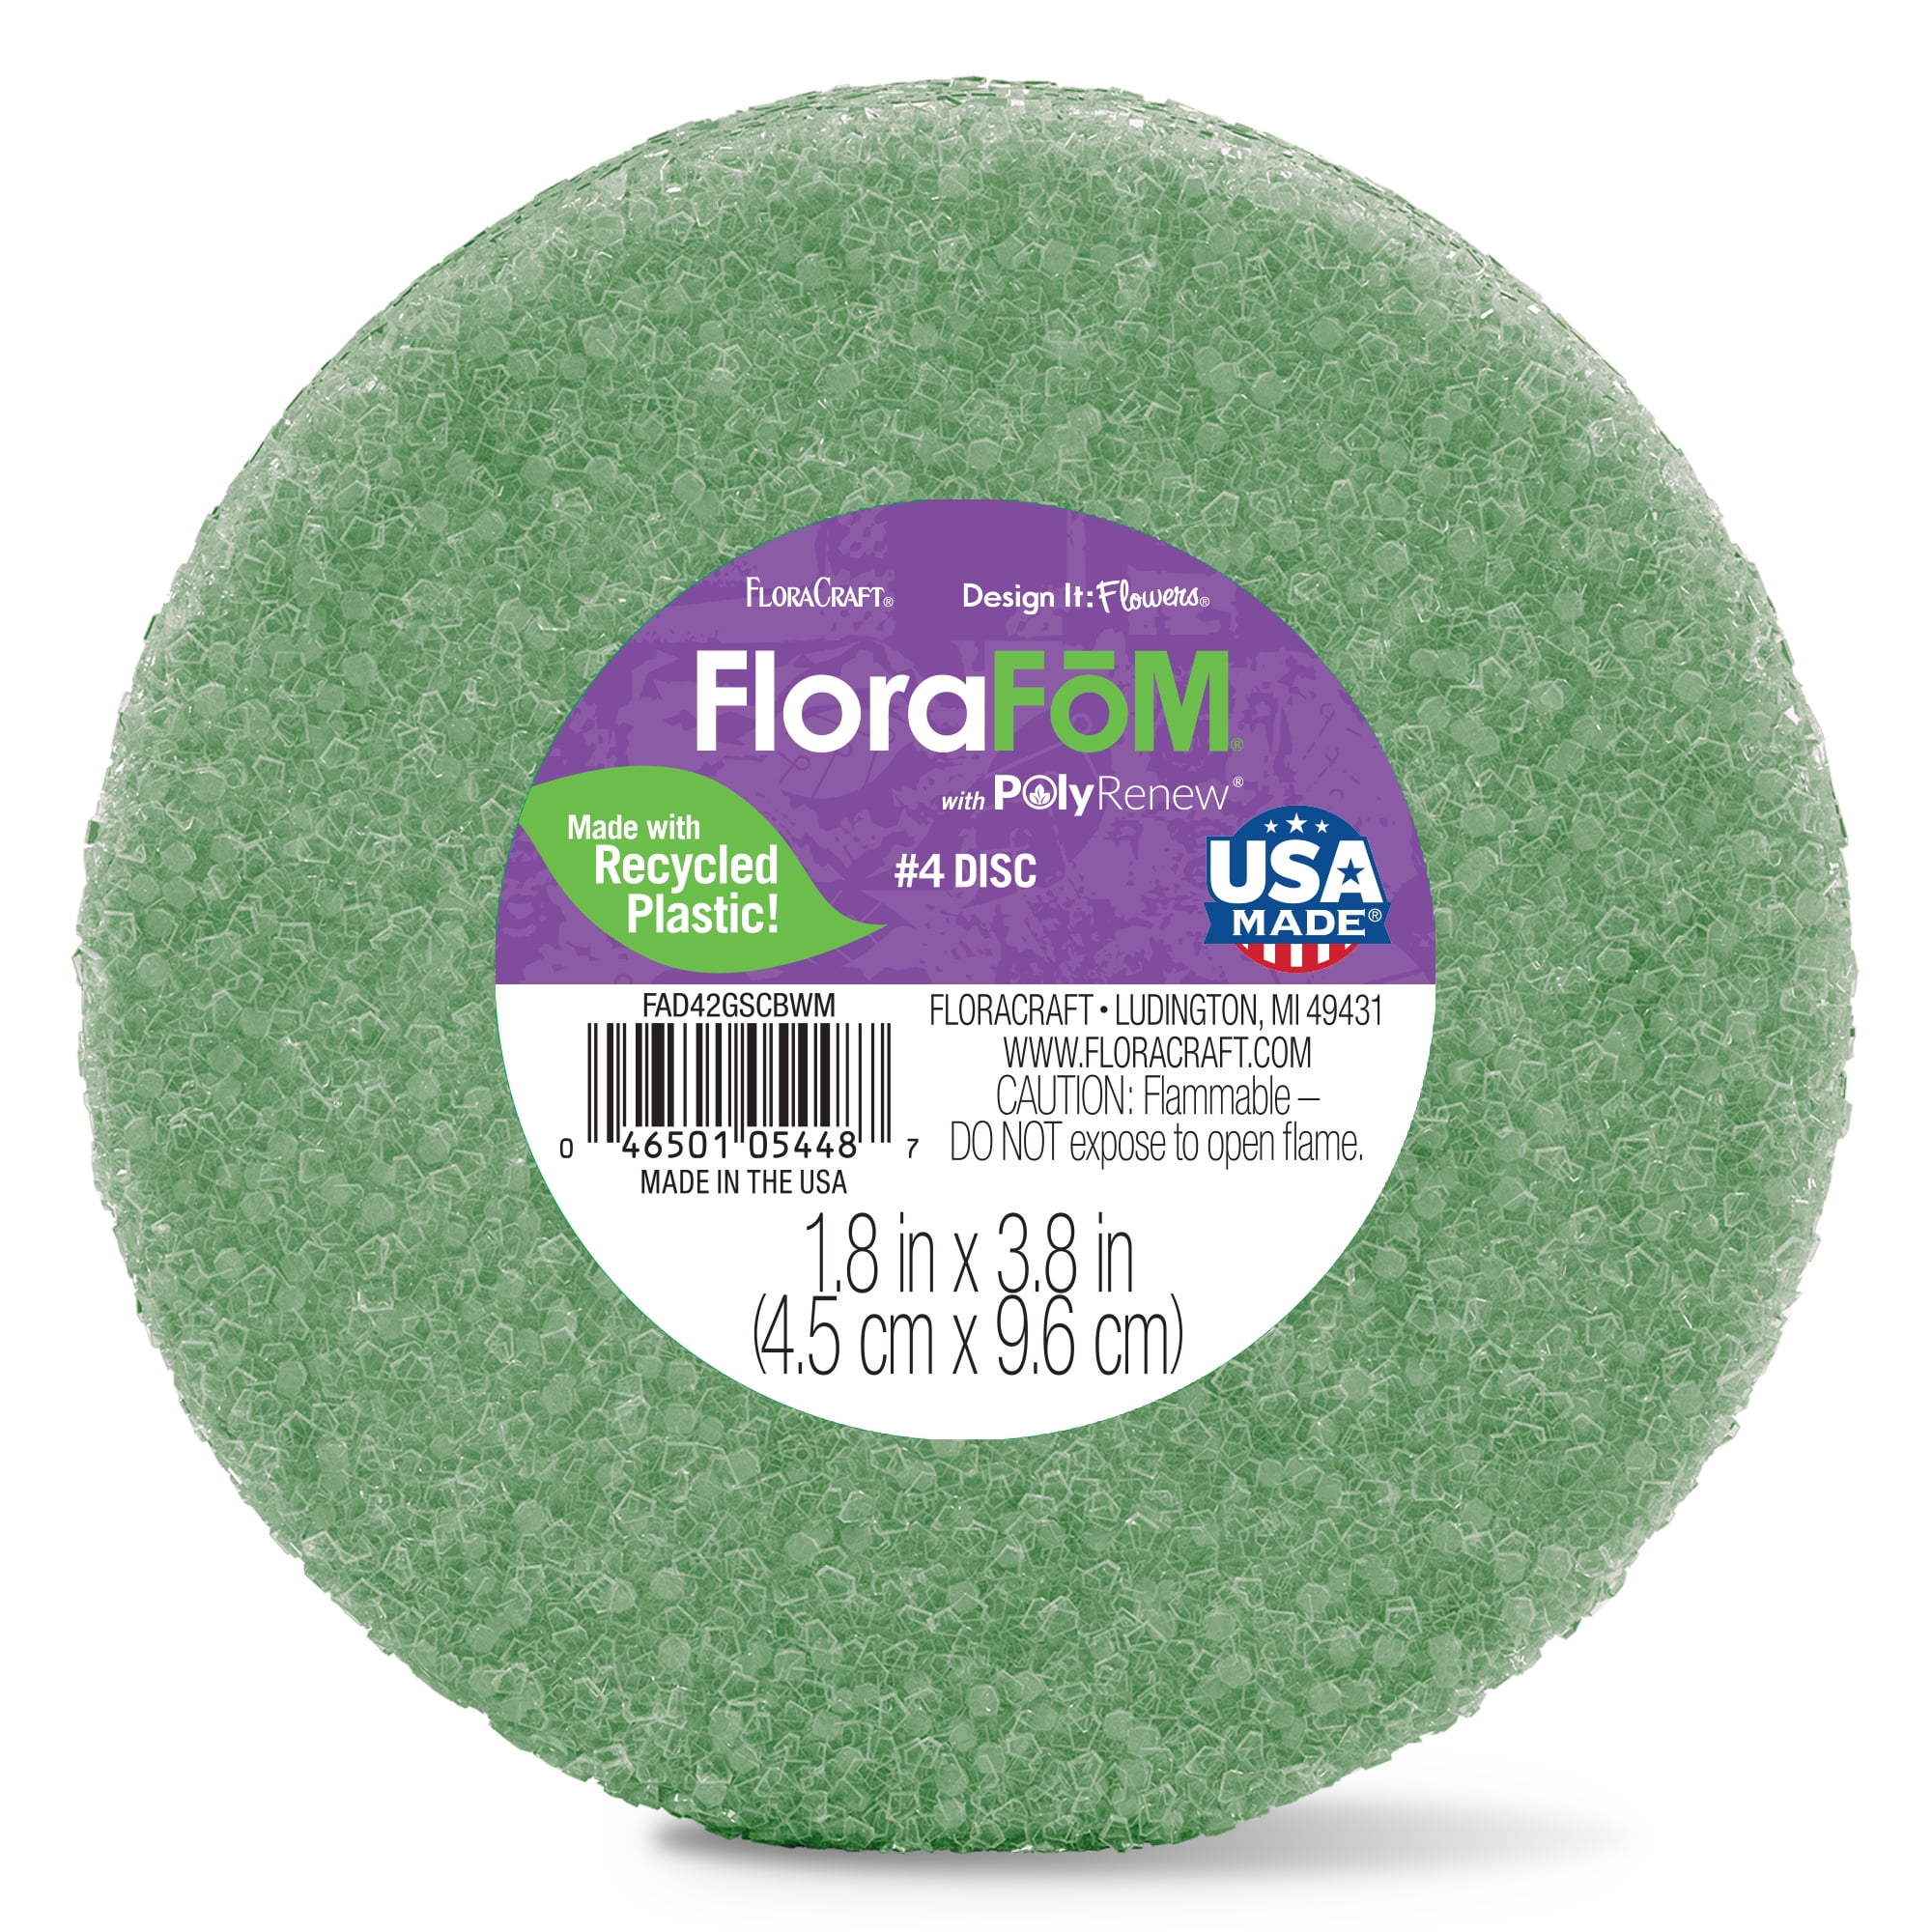 Creativ Oasis Floral Foam, Green, Size 23x11x8 Cm, 1 Pc Foam